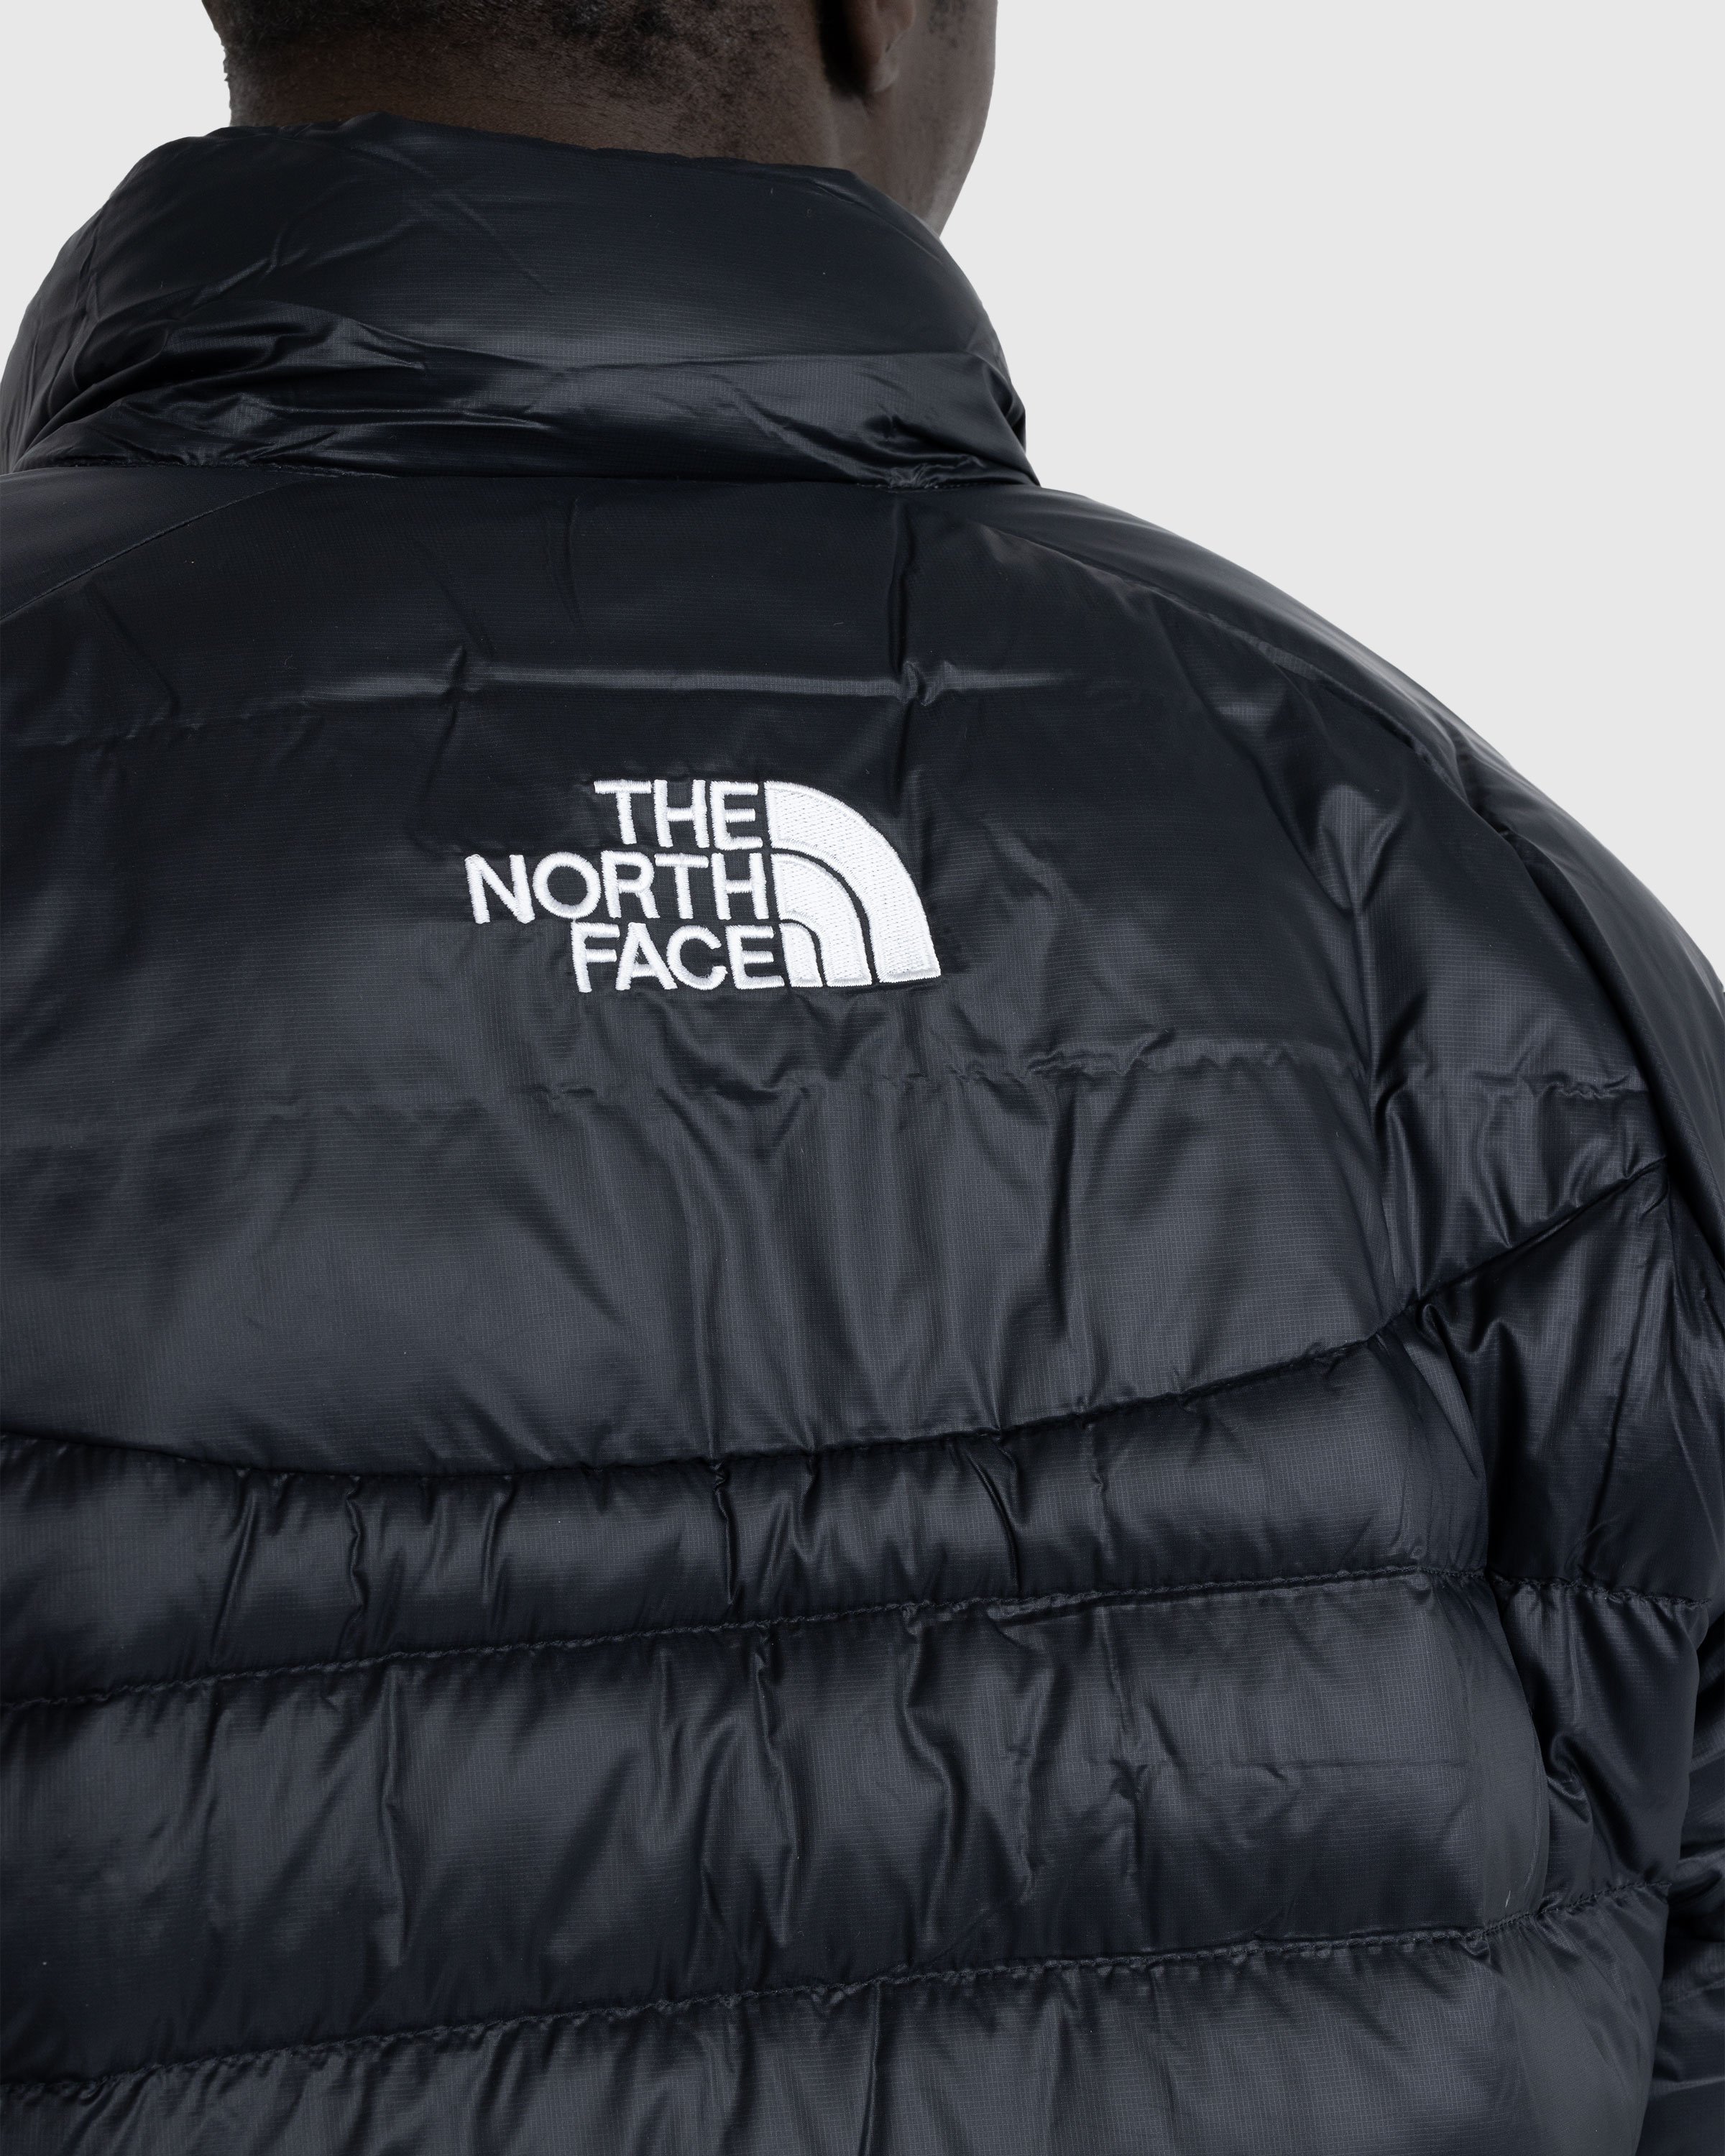 The North Face - Carduelis Down Jacket Black - Clothing - Black - Image 5